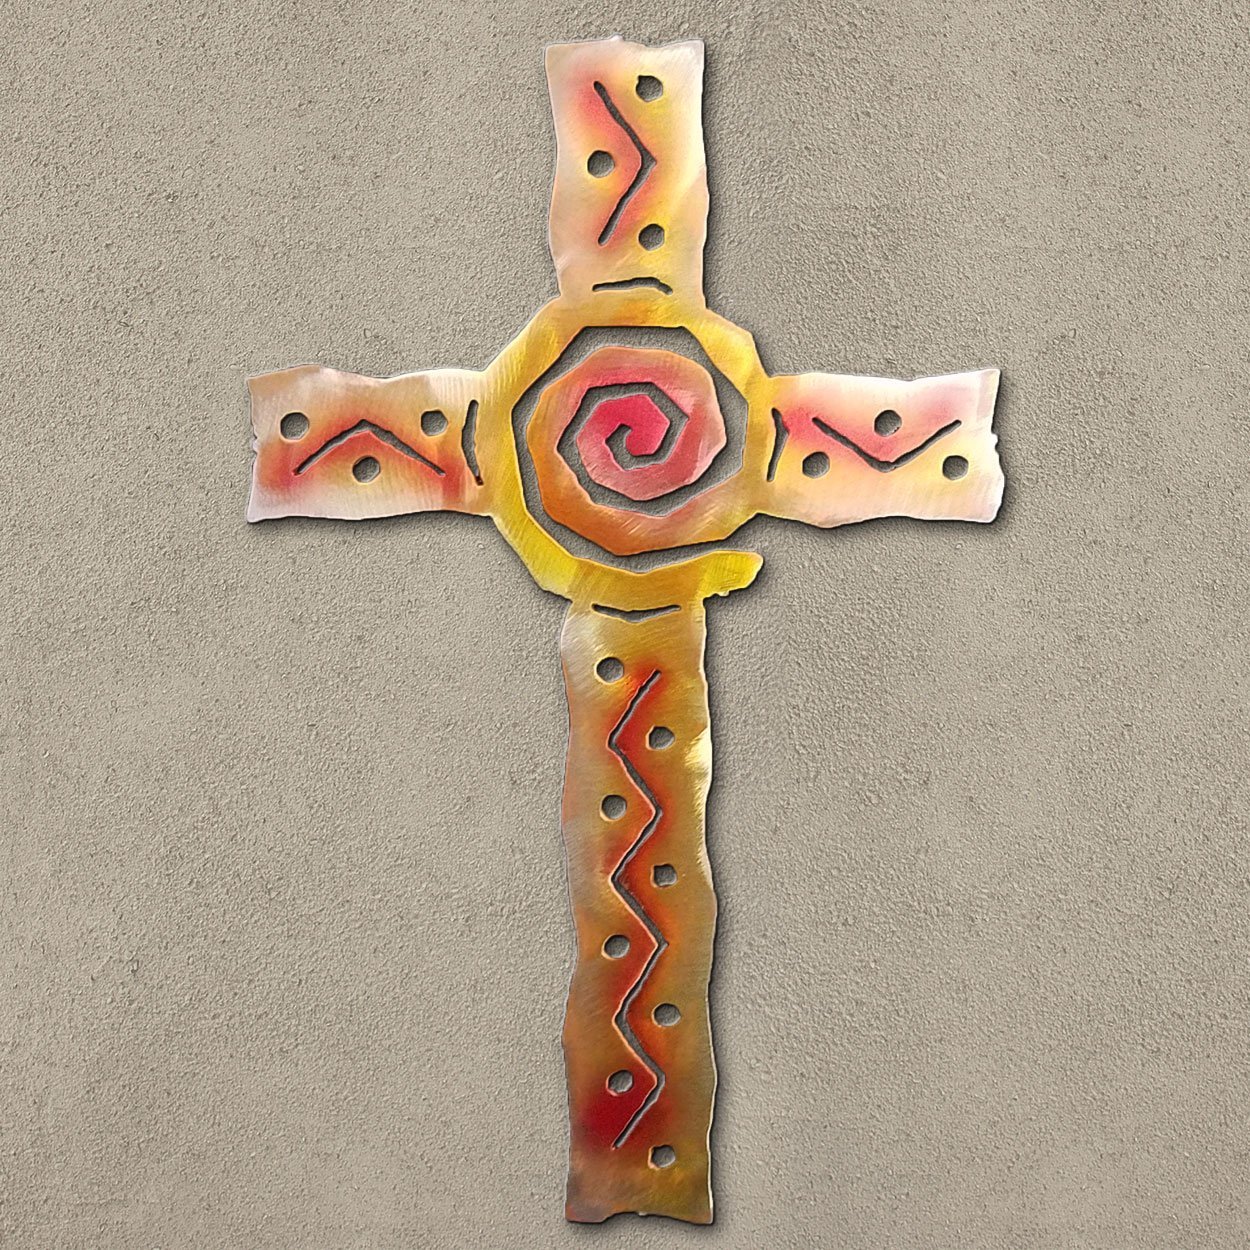 165093 - 24in Spiral Cross 3D Southwest Metal Wall Art in Sunset Finish